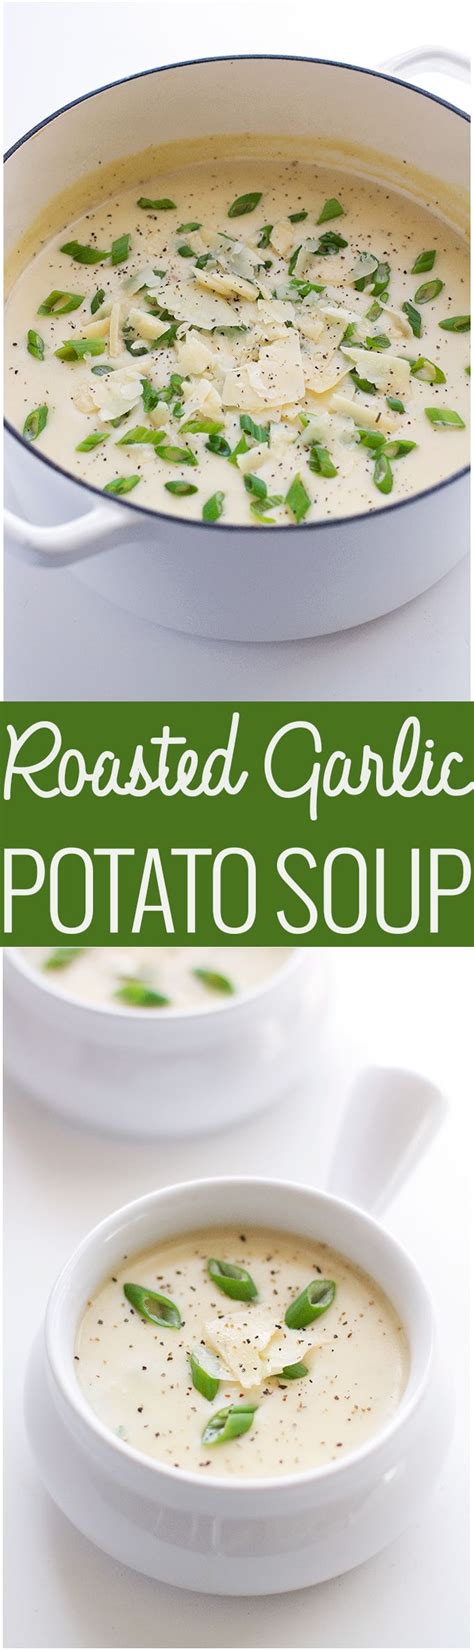 Creamy Roasted Garlic Potato Soup Recipe Little Spice Jar